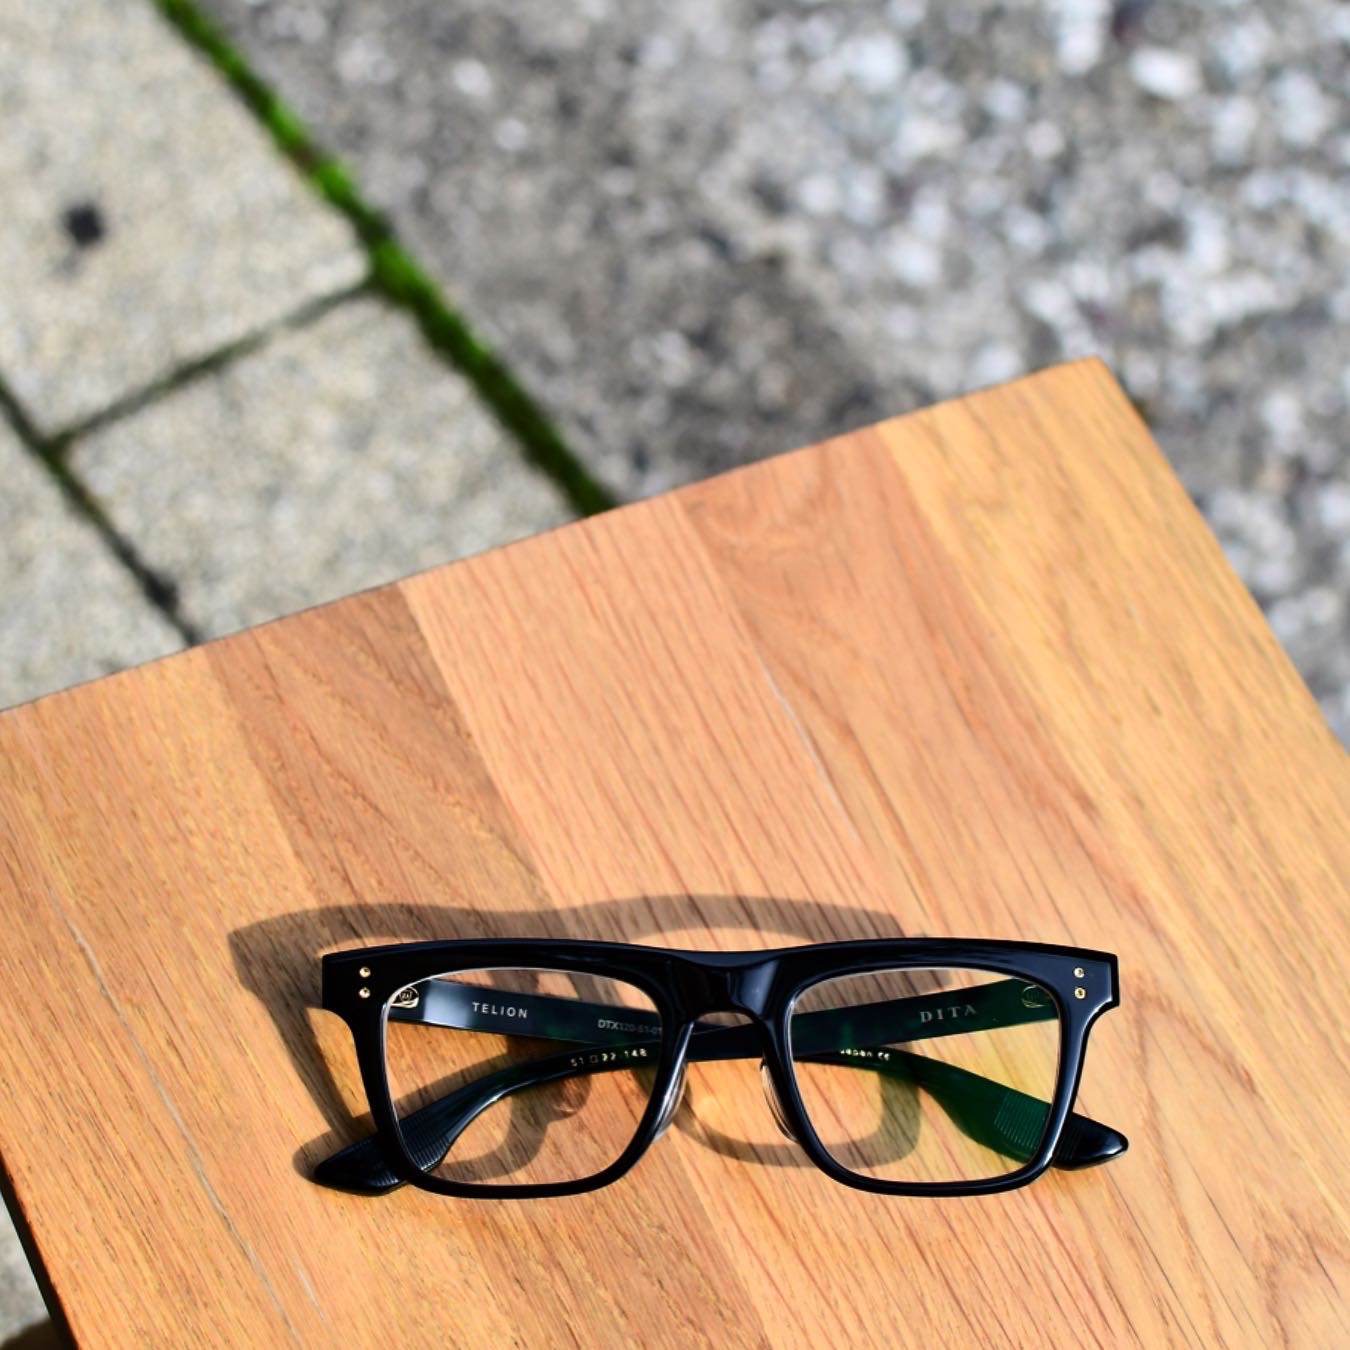 DITA TELION | GLEAM OPTICAL 福岡 | 北九州市小倉のメガネ店（めがね・眼鏡・サングラス）